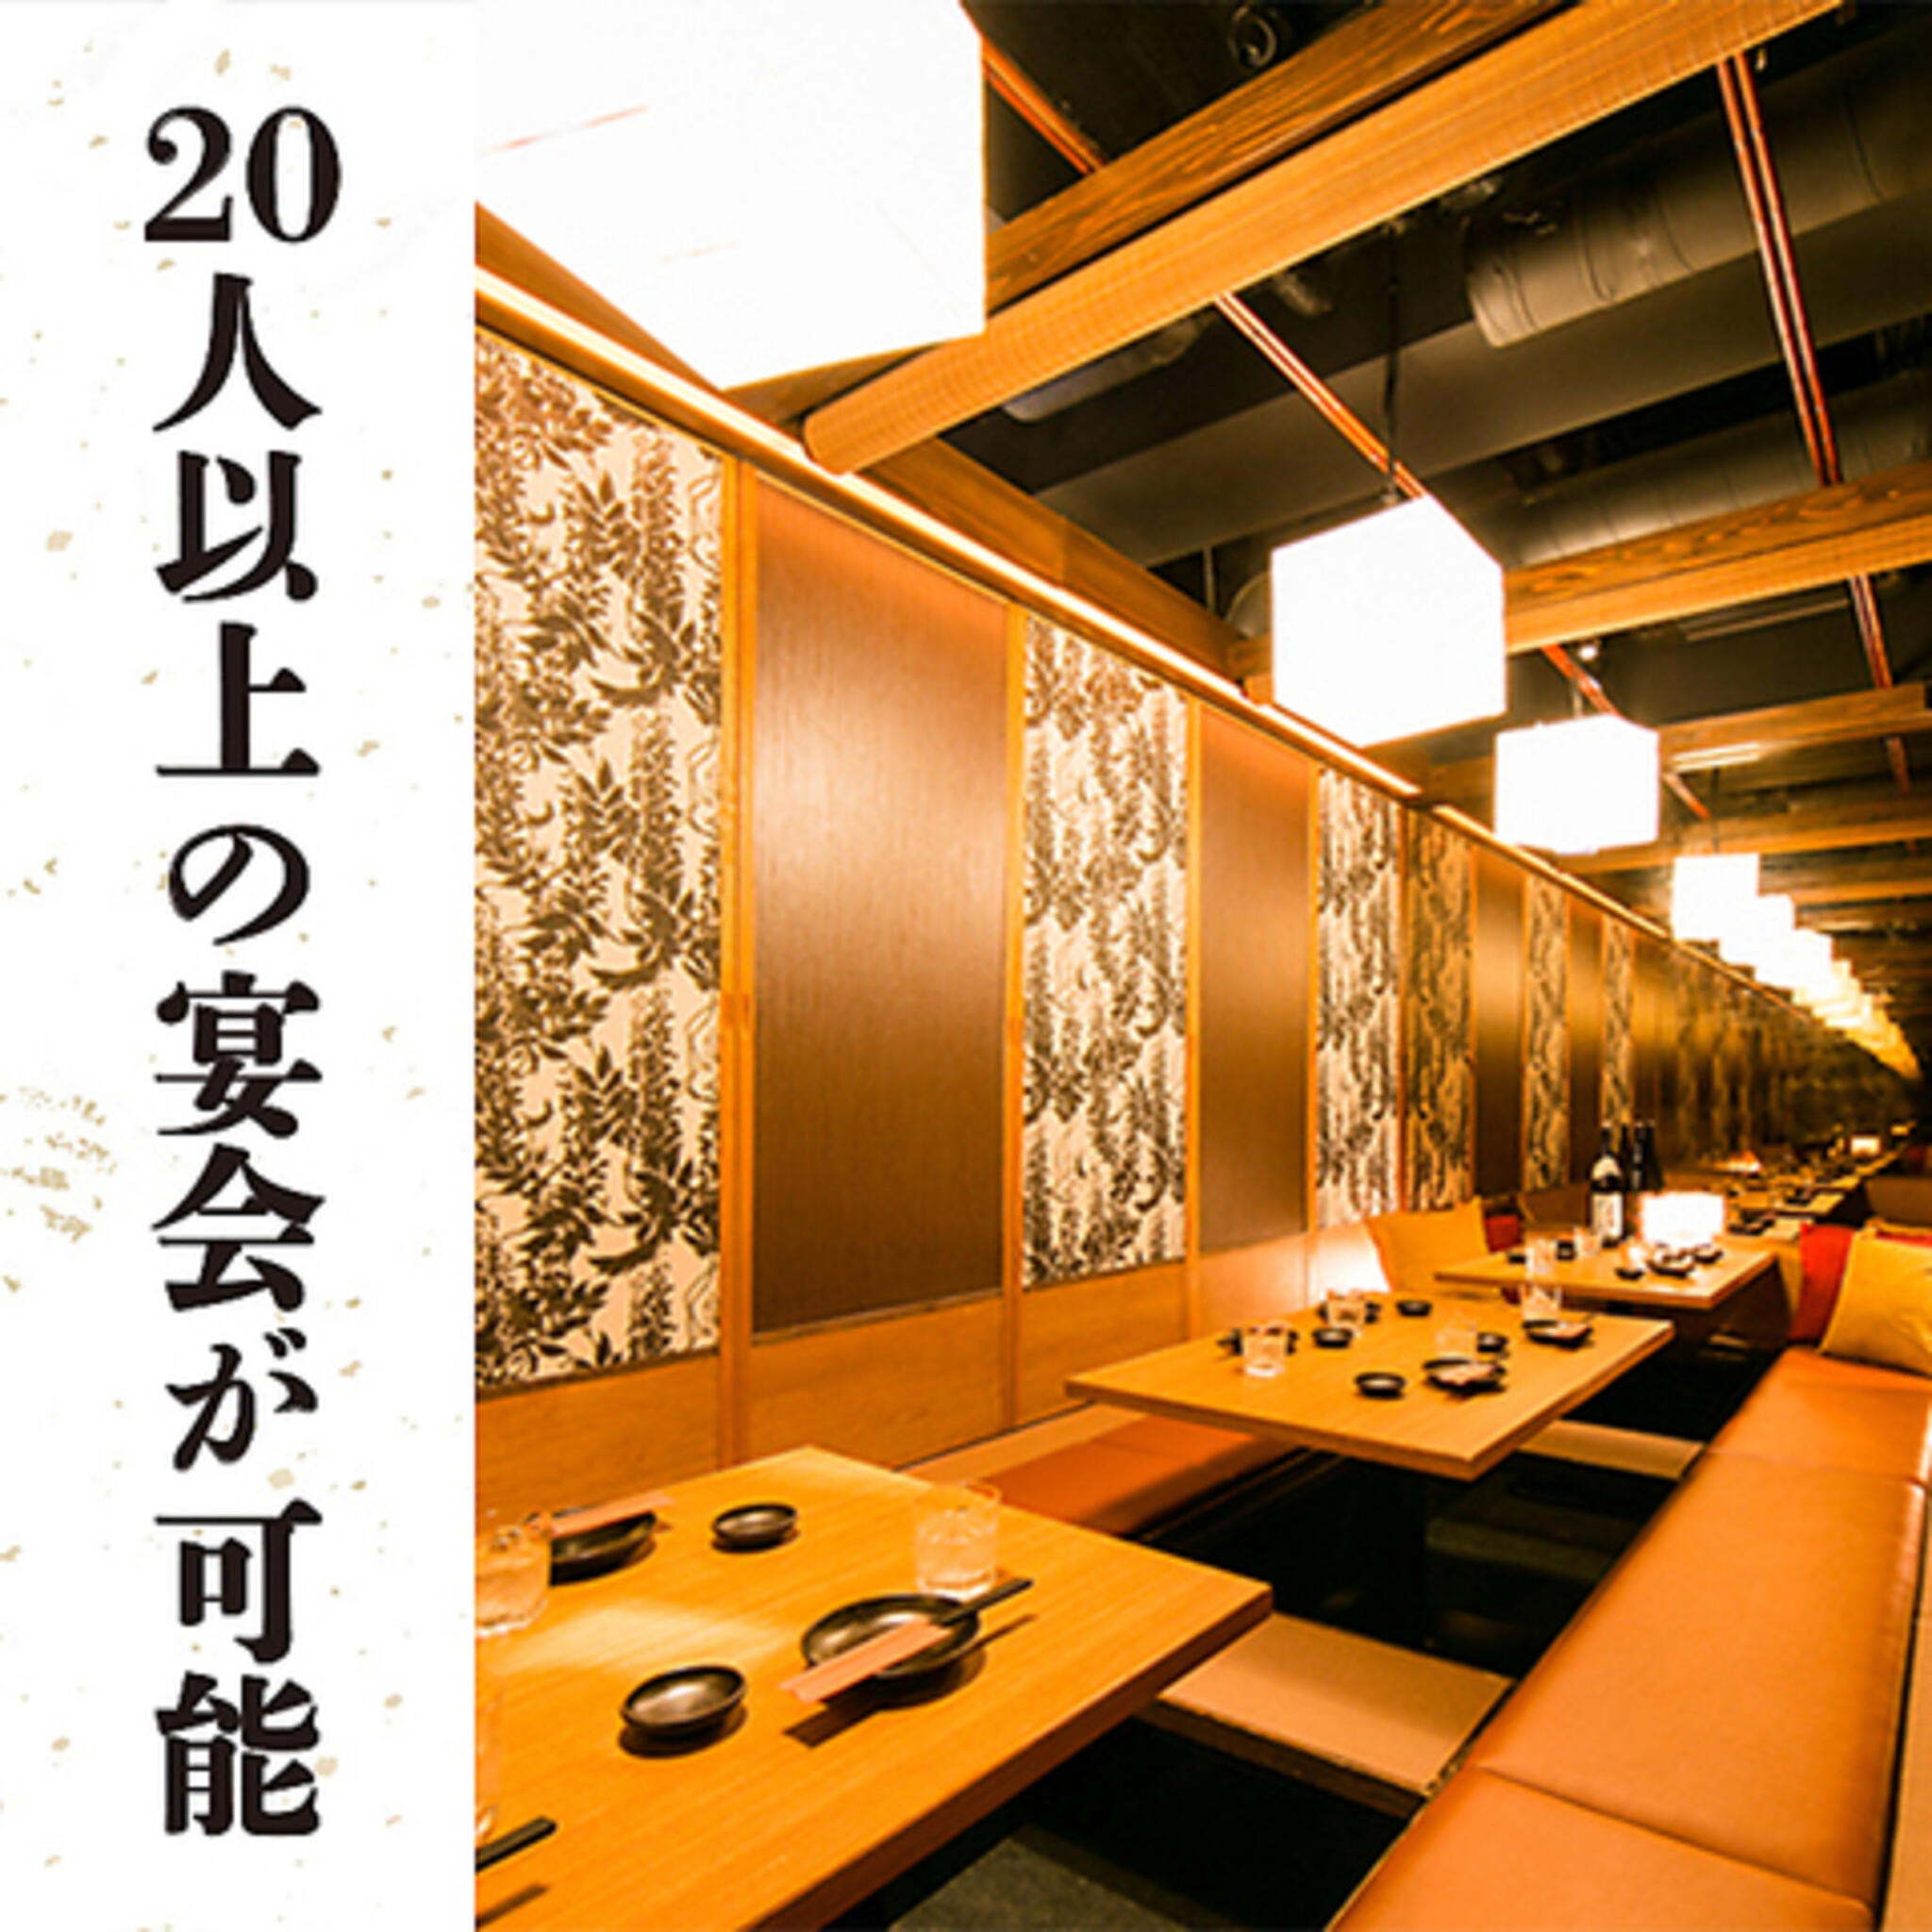 全180種食べ飲み放題 個室居酒屋 彩月 札幌本店の代表写真2